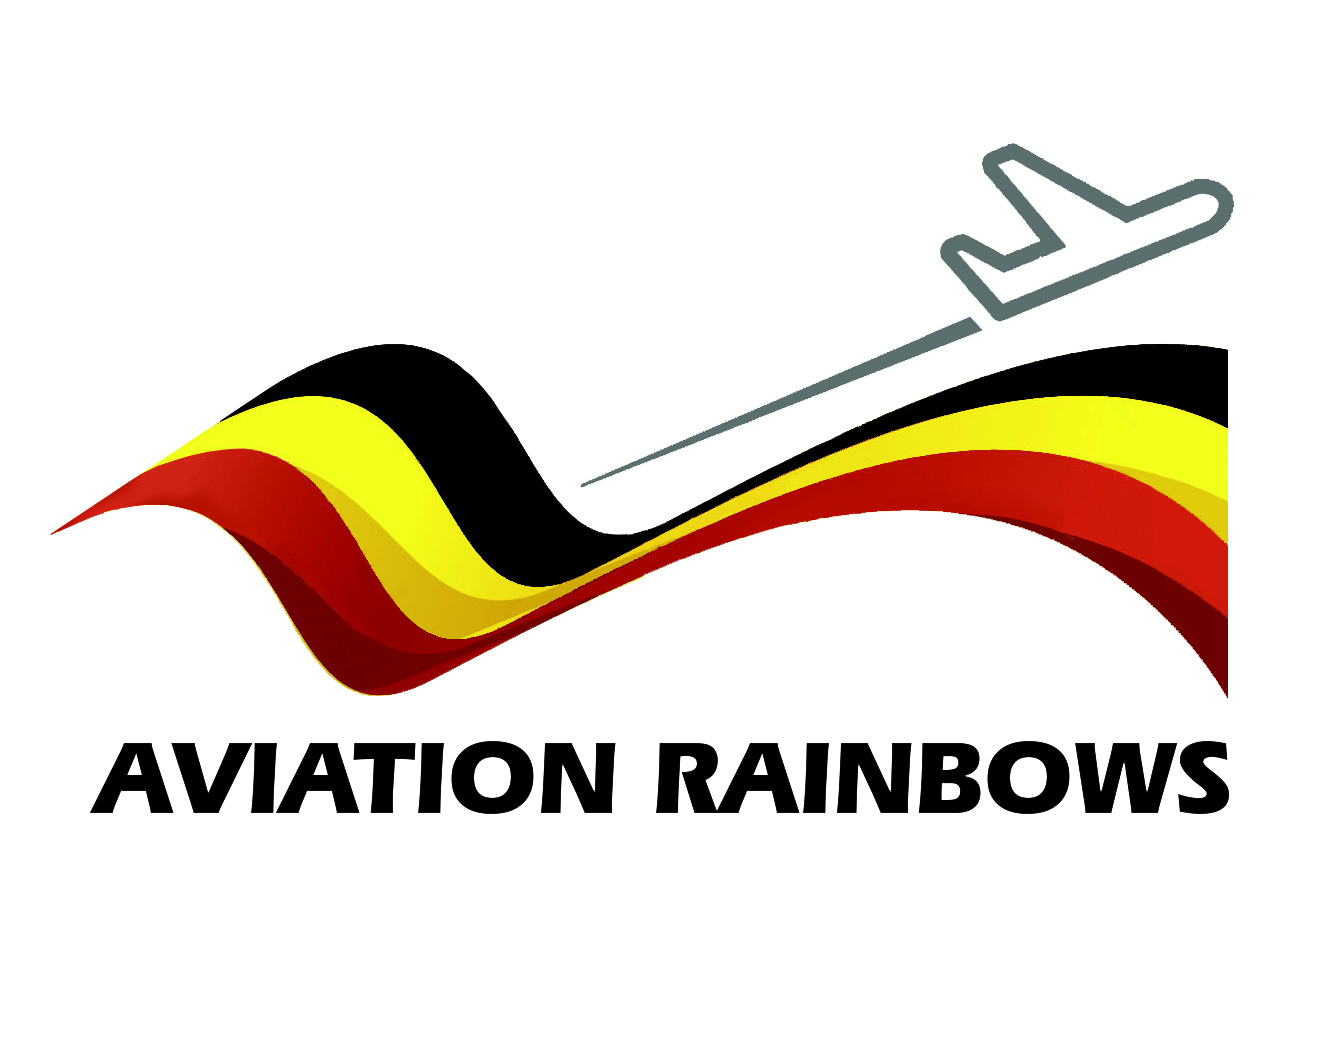 Aviation Rainbows